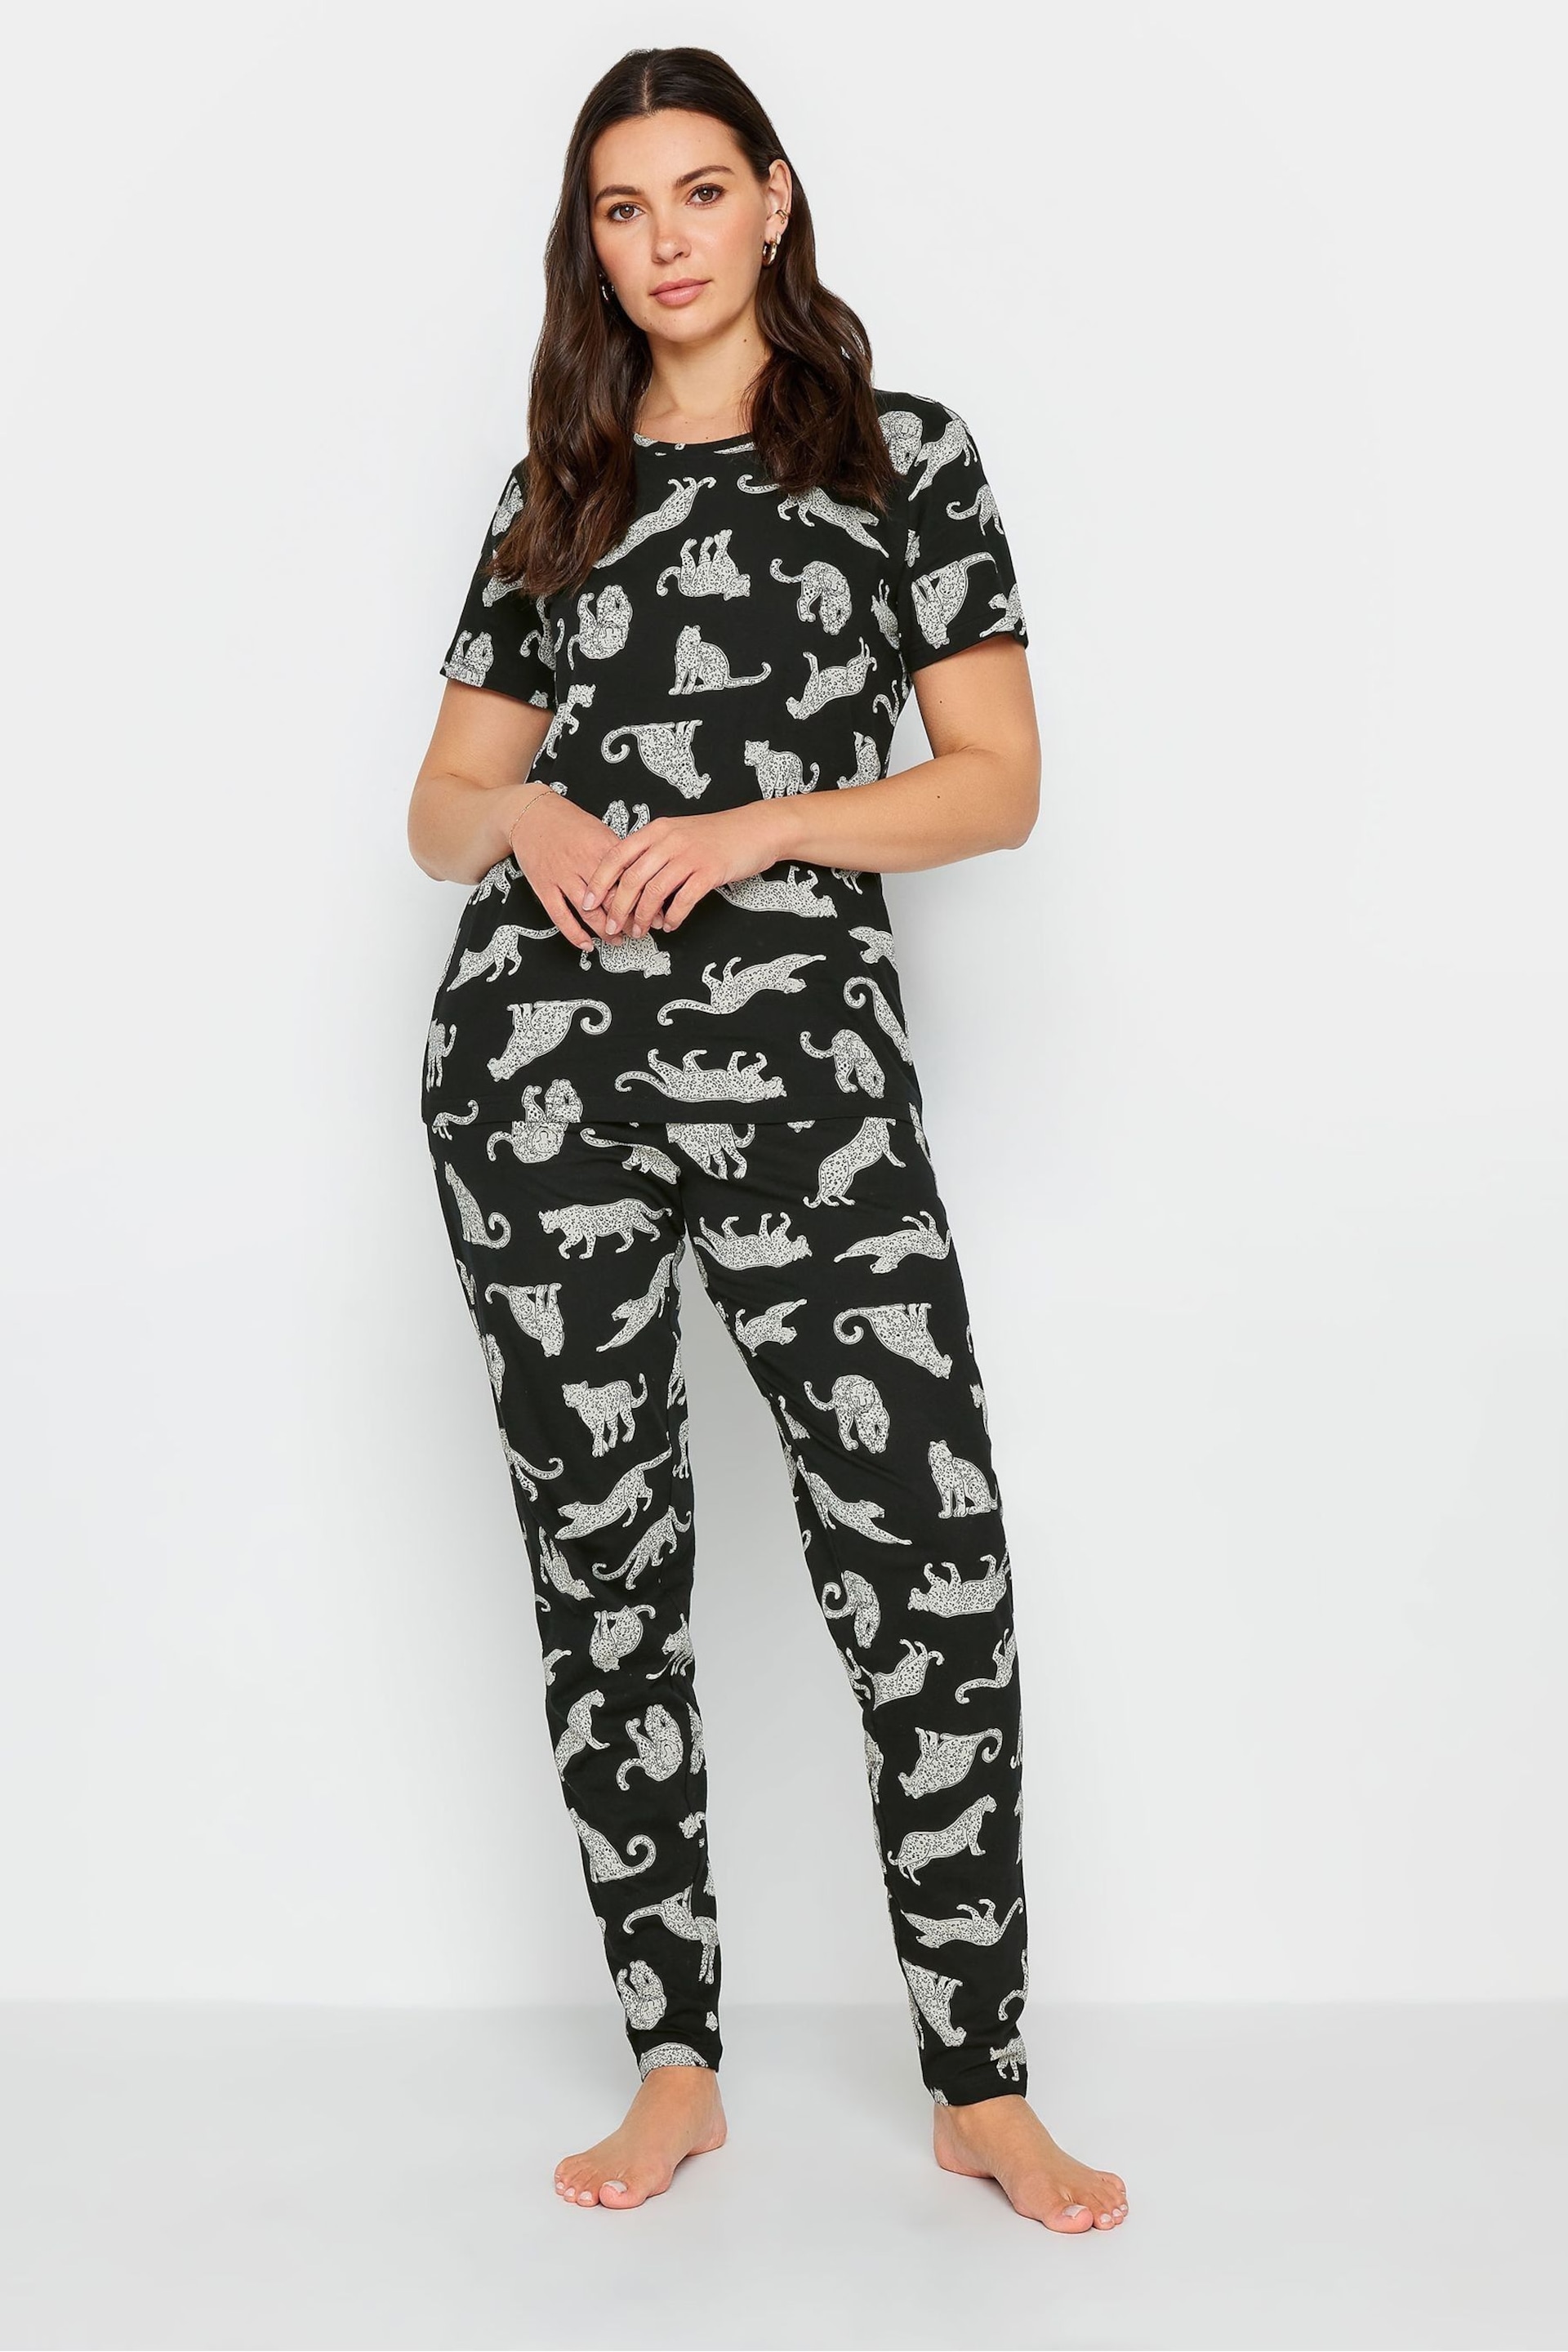 Long Tall Sally Black Animal Print Tapered Leg Pyjama Set - Image 1 of 5